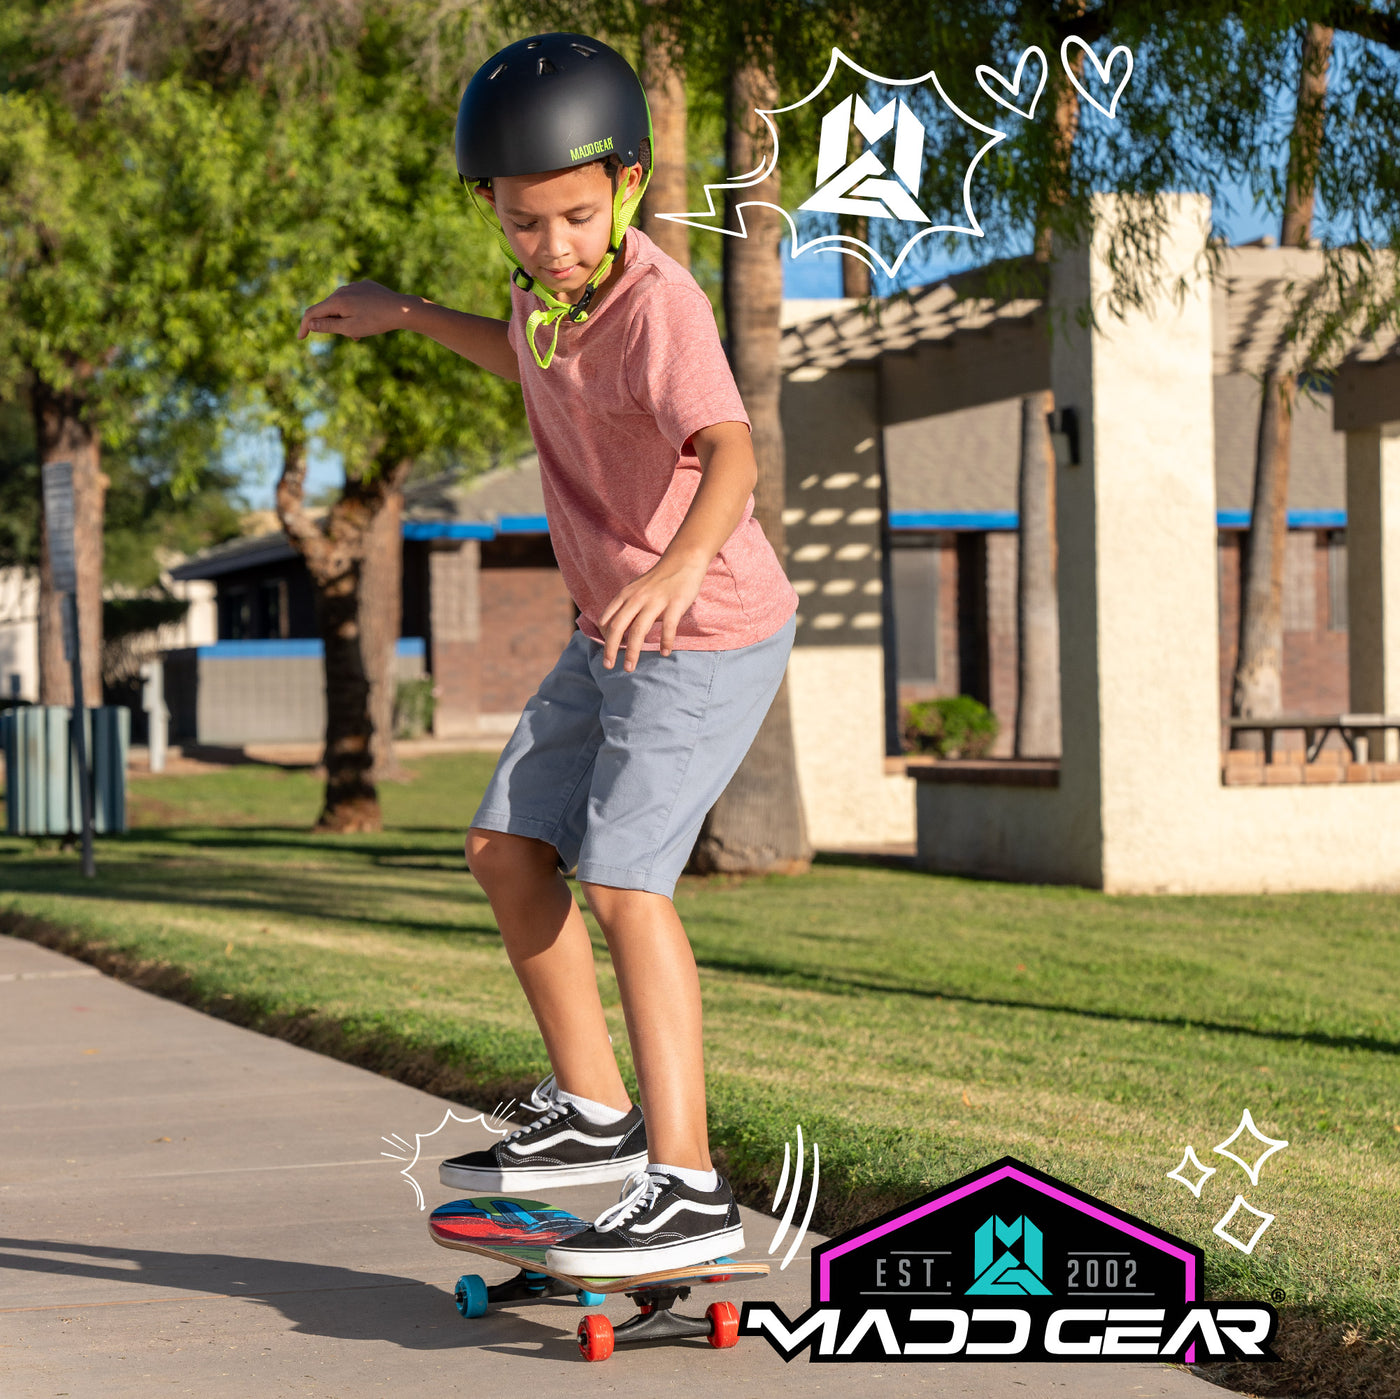 Madd Gear Complete 31" Learn to Ride Popsicle Skateboard Beginner Skaters Maple Deck Kids Boys Girls